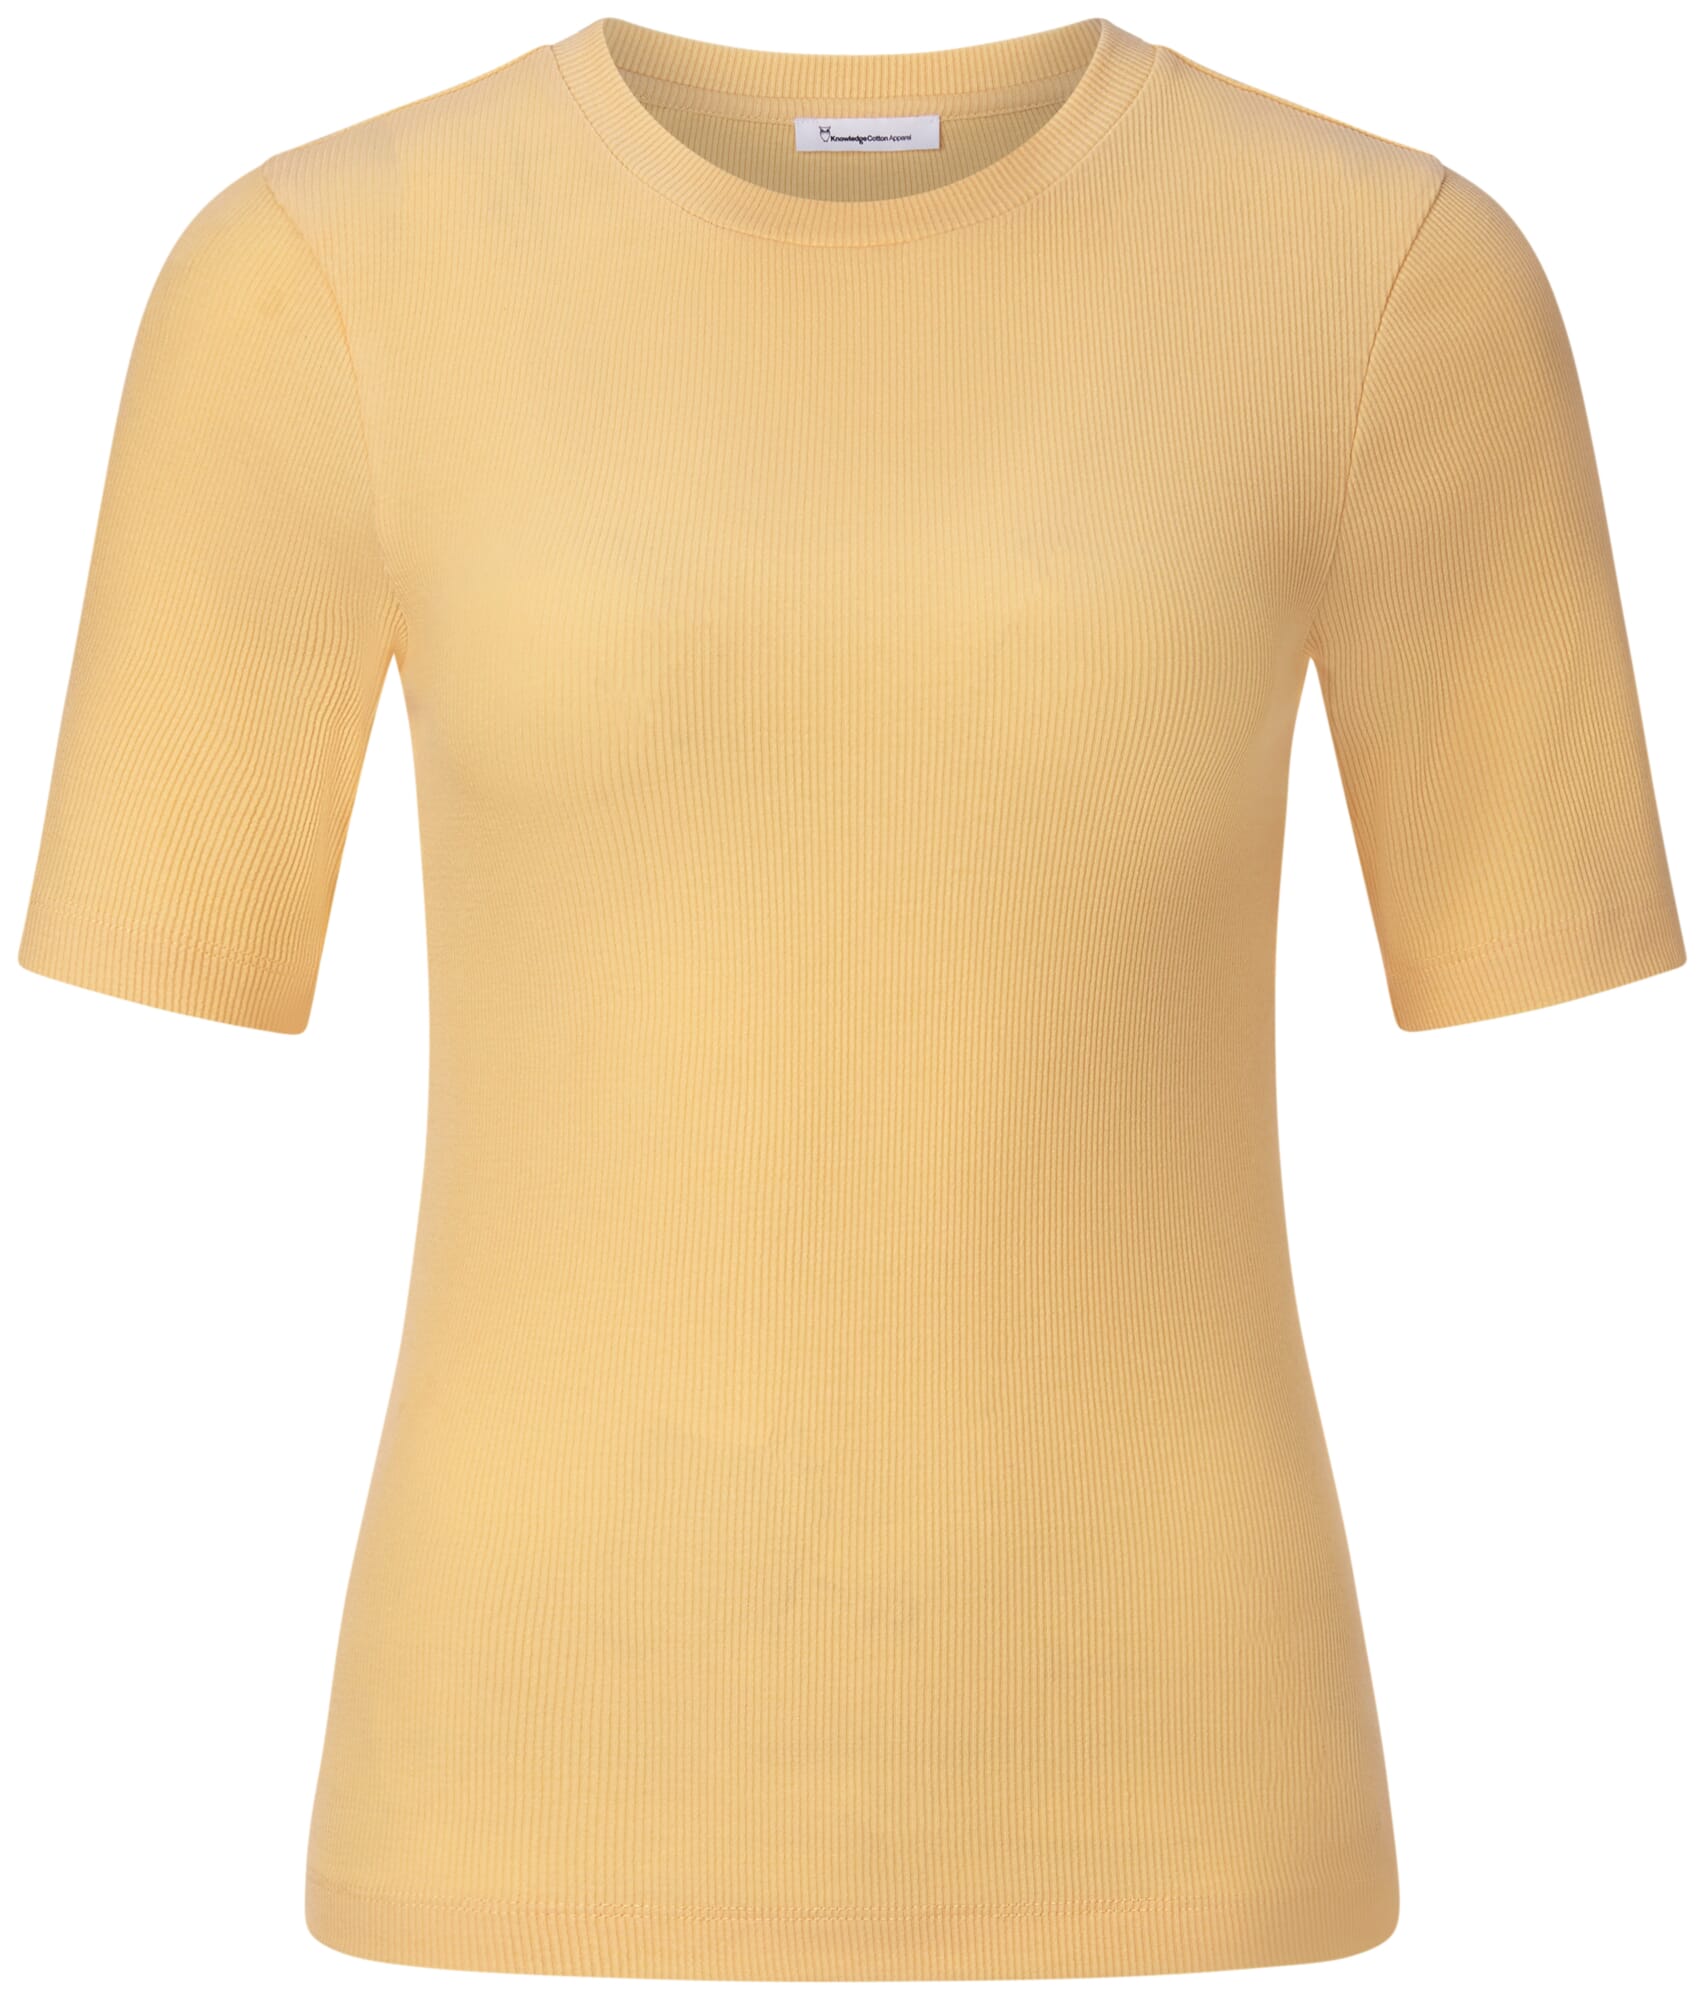 Yellow T-shirt, Manufactum ribbed | Ladies\'